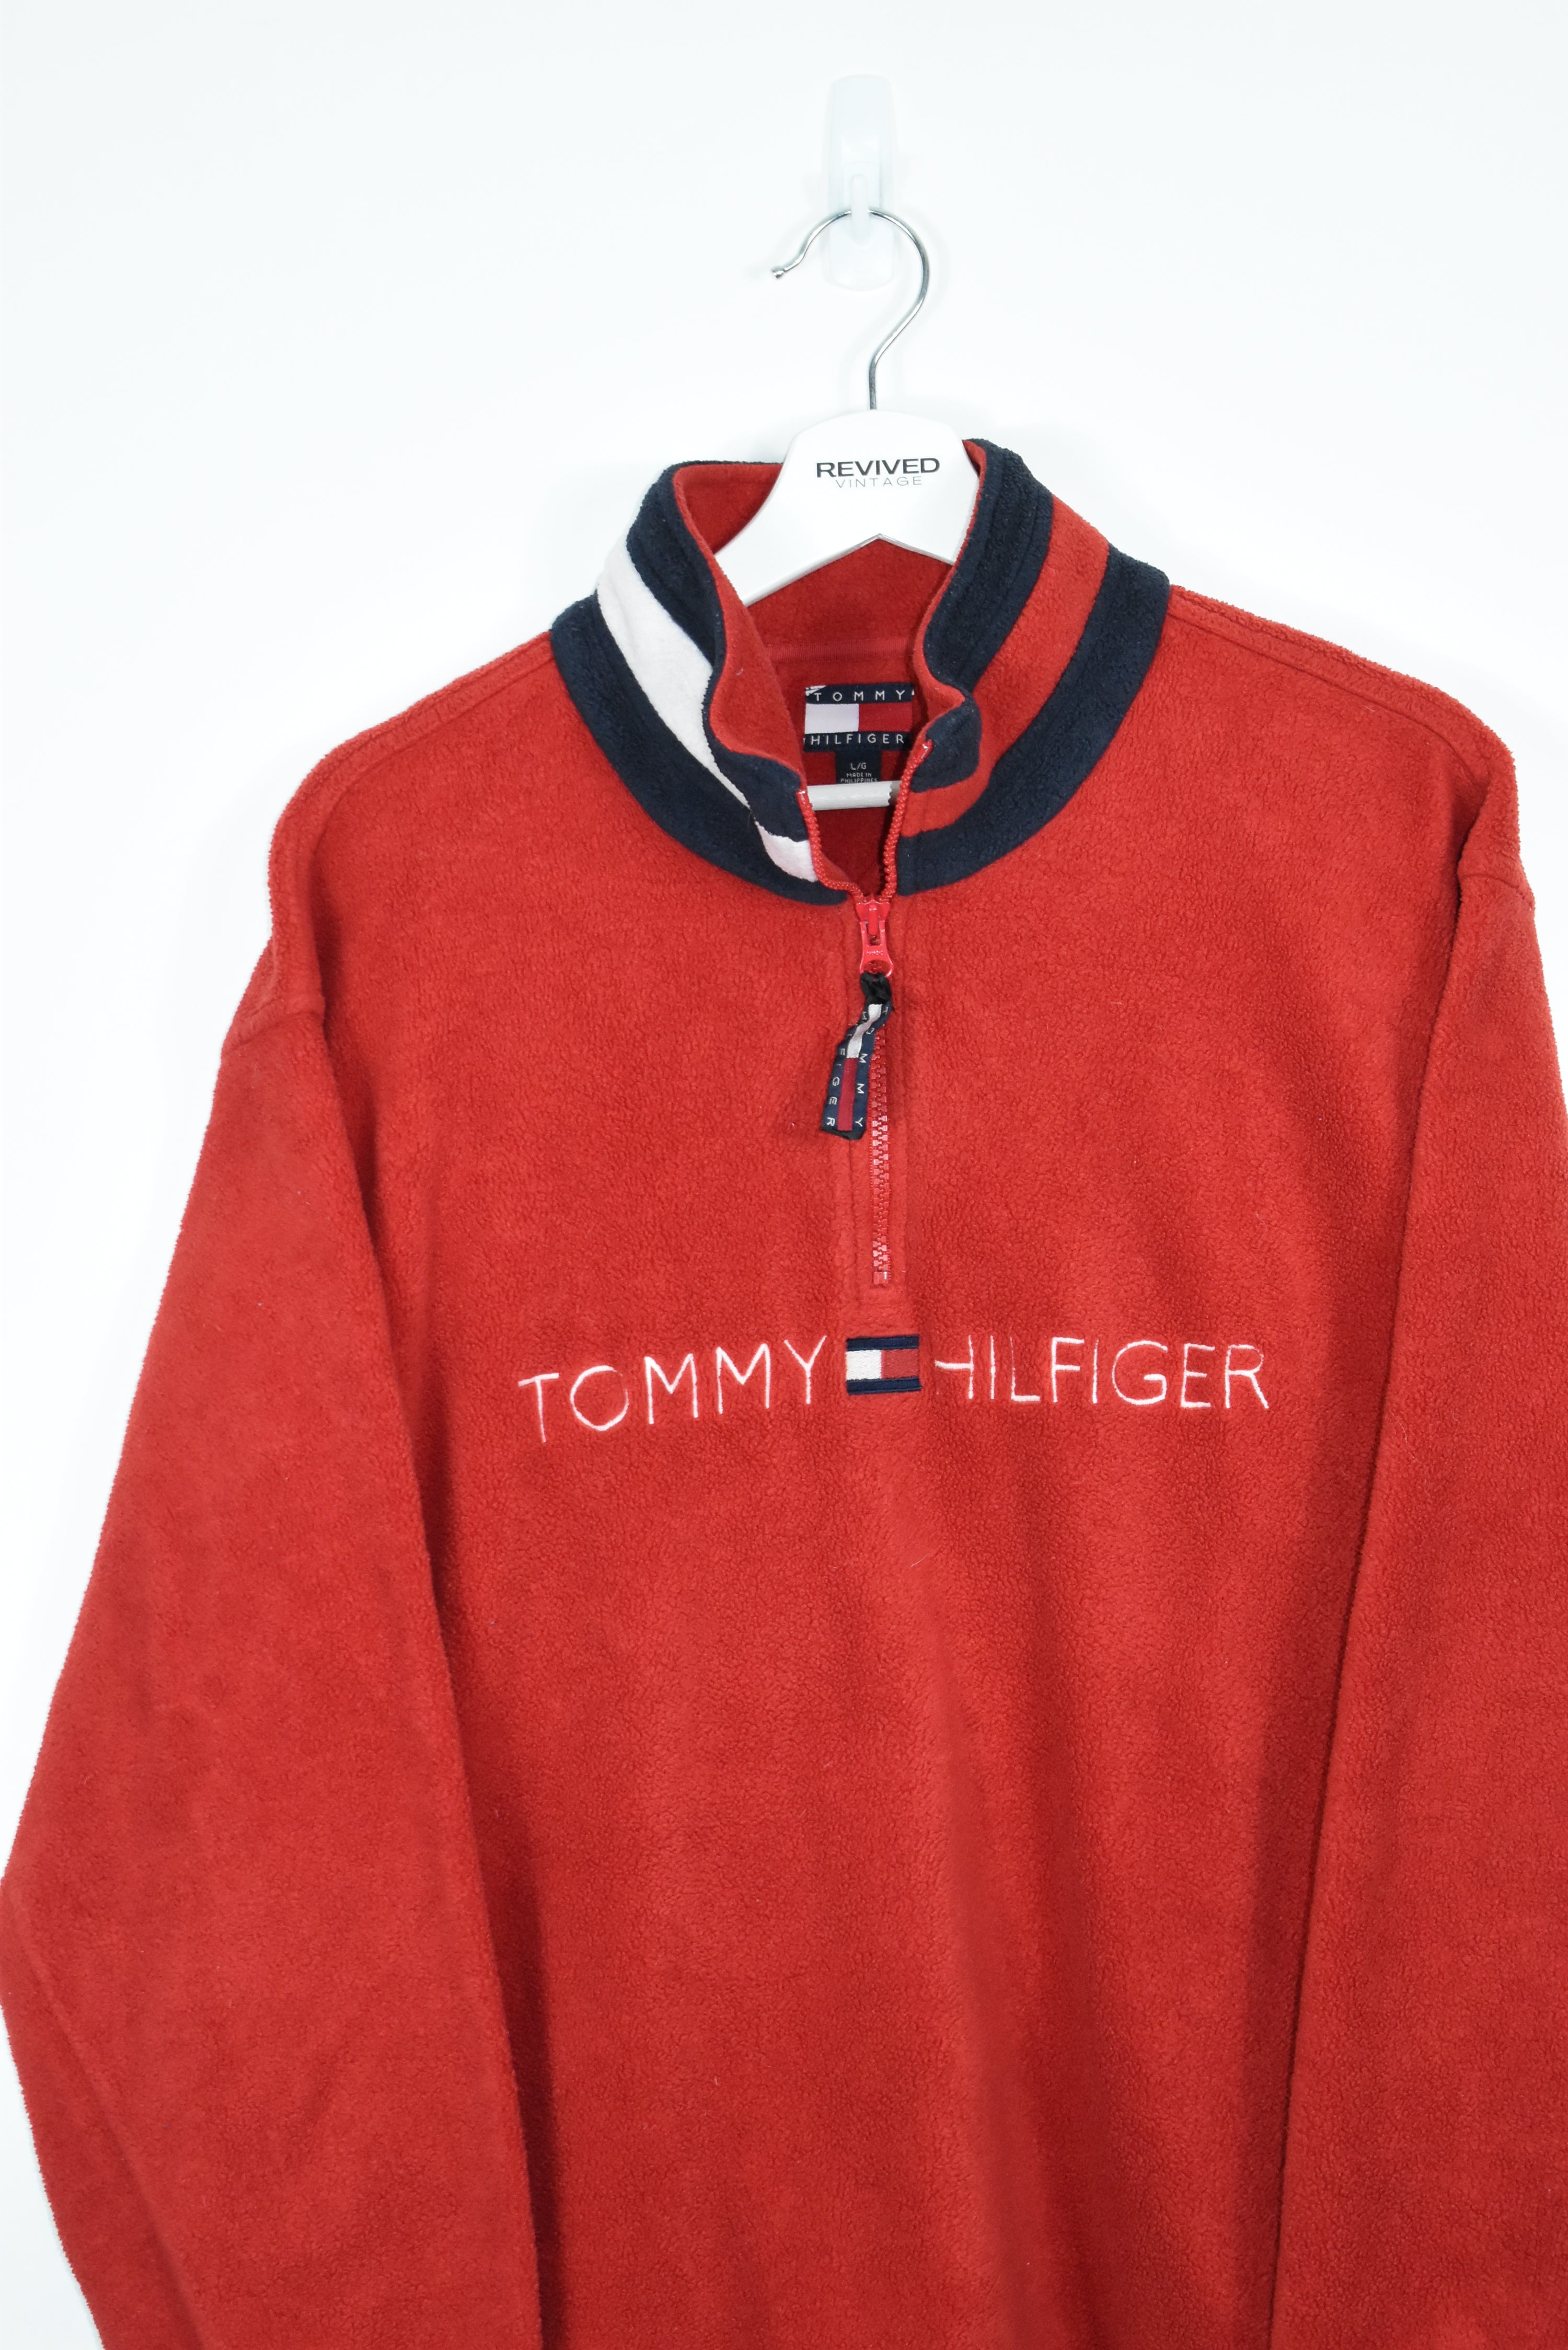 Vintage RARE Tommy Hilfiger Embroidery Fleece LARGE